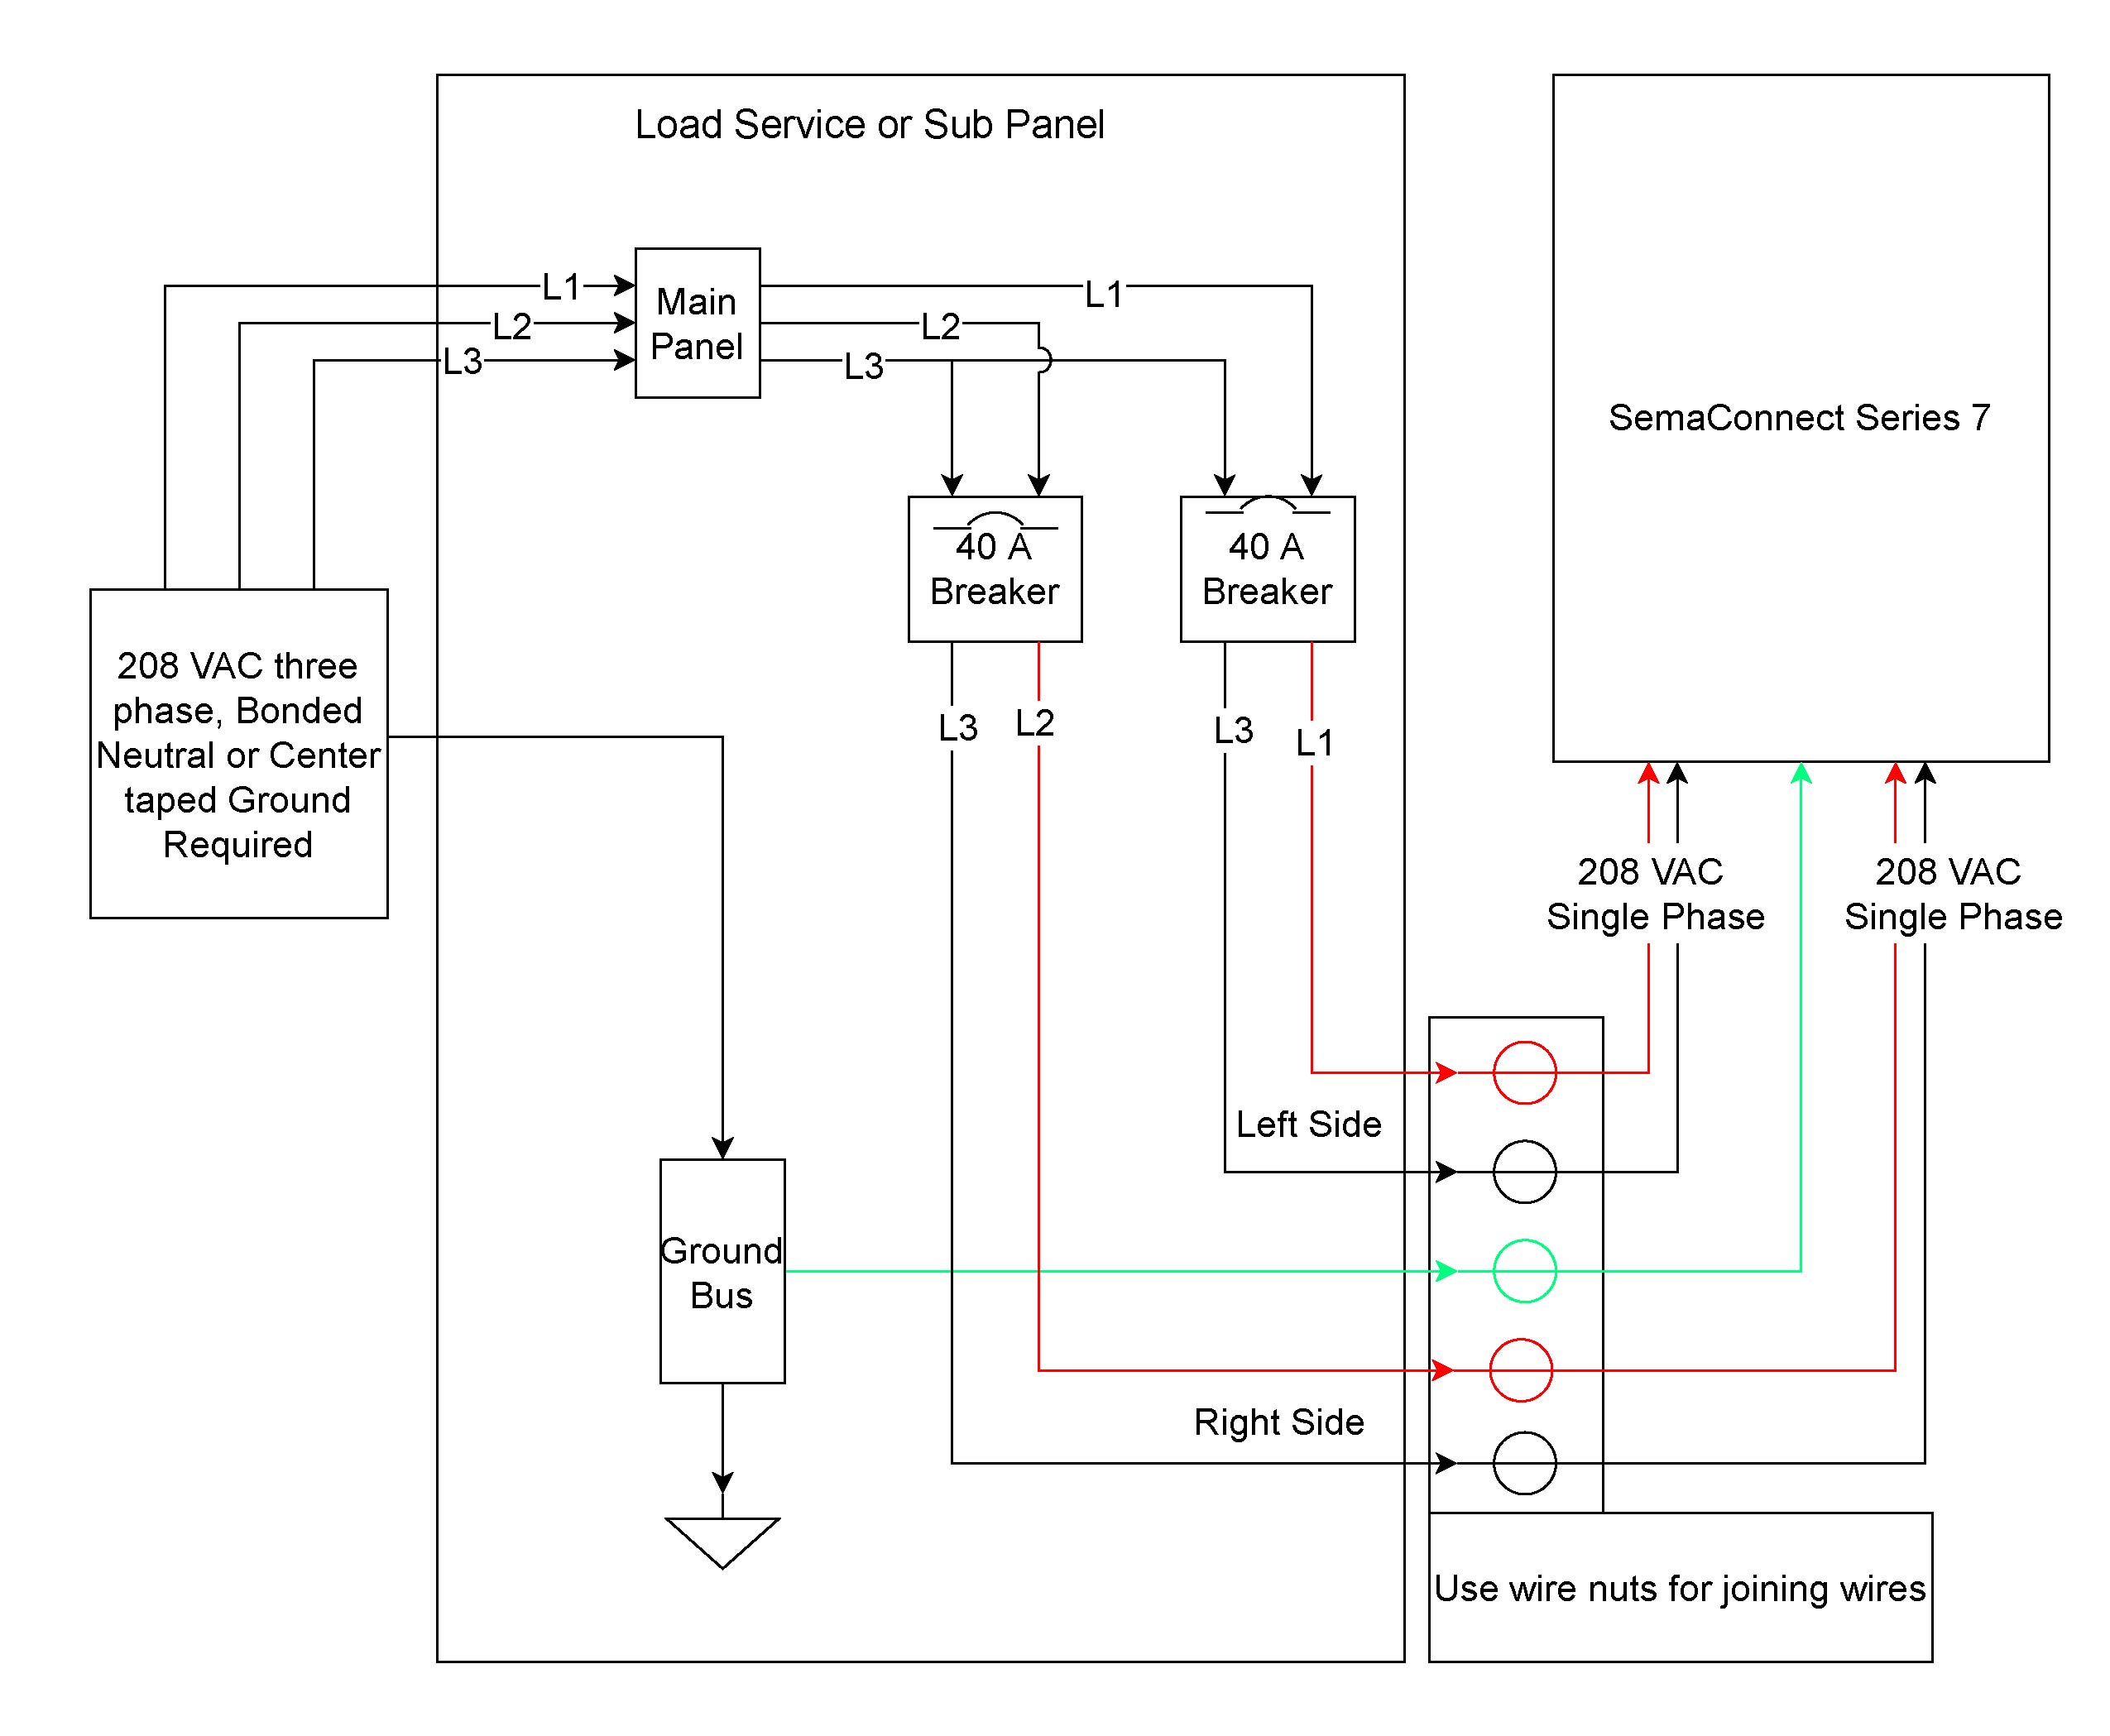 aiphone wiring diagram